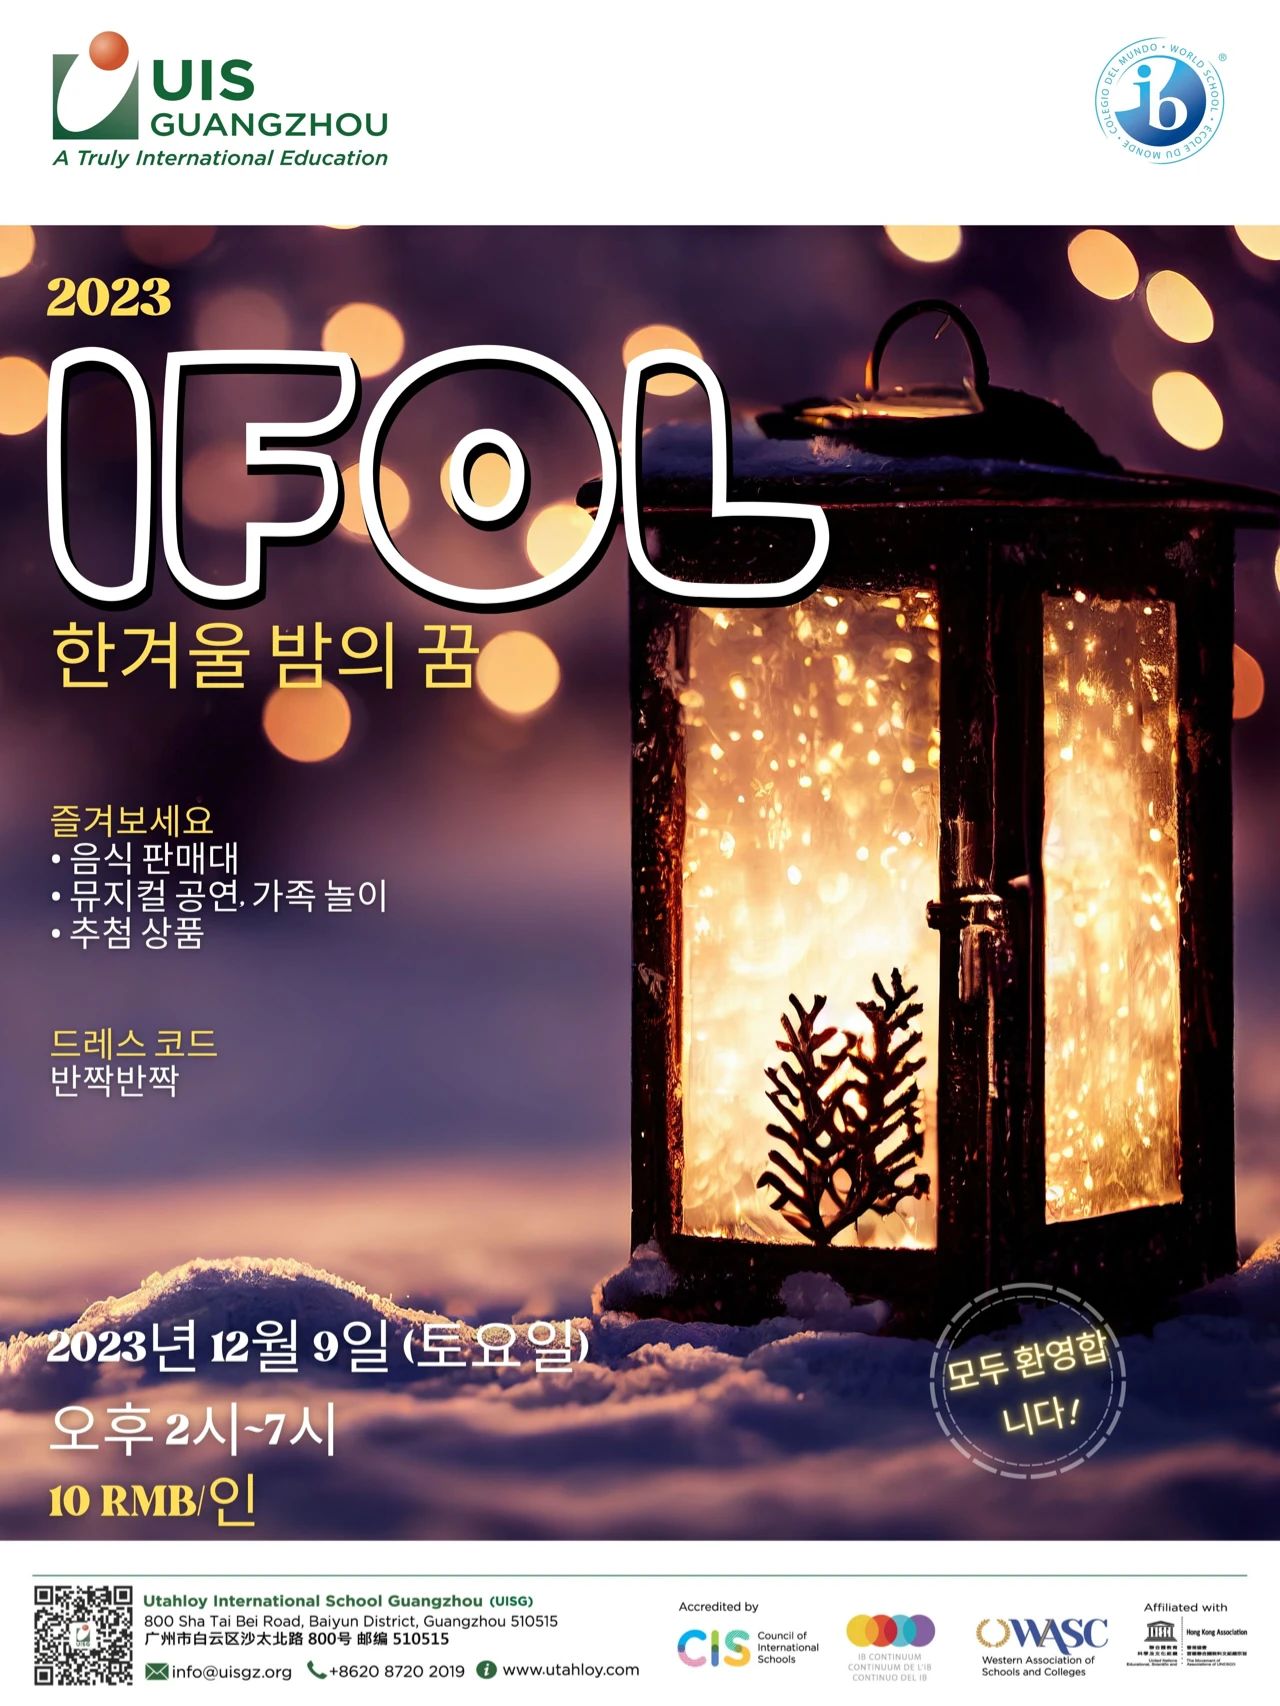 International Festival of Light (IFOL) - December 9th 2023